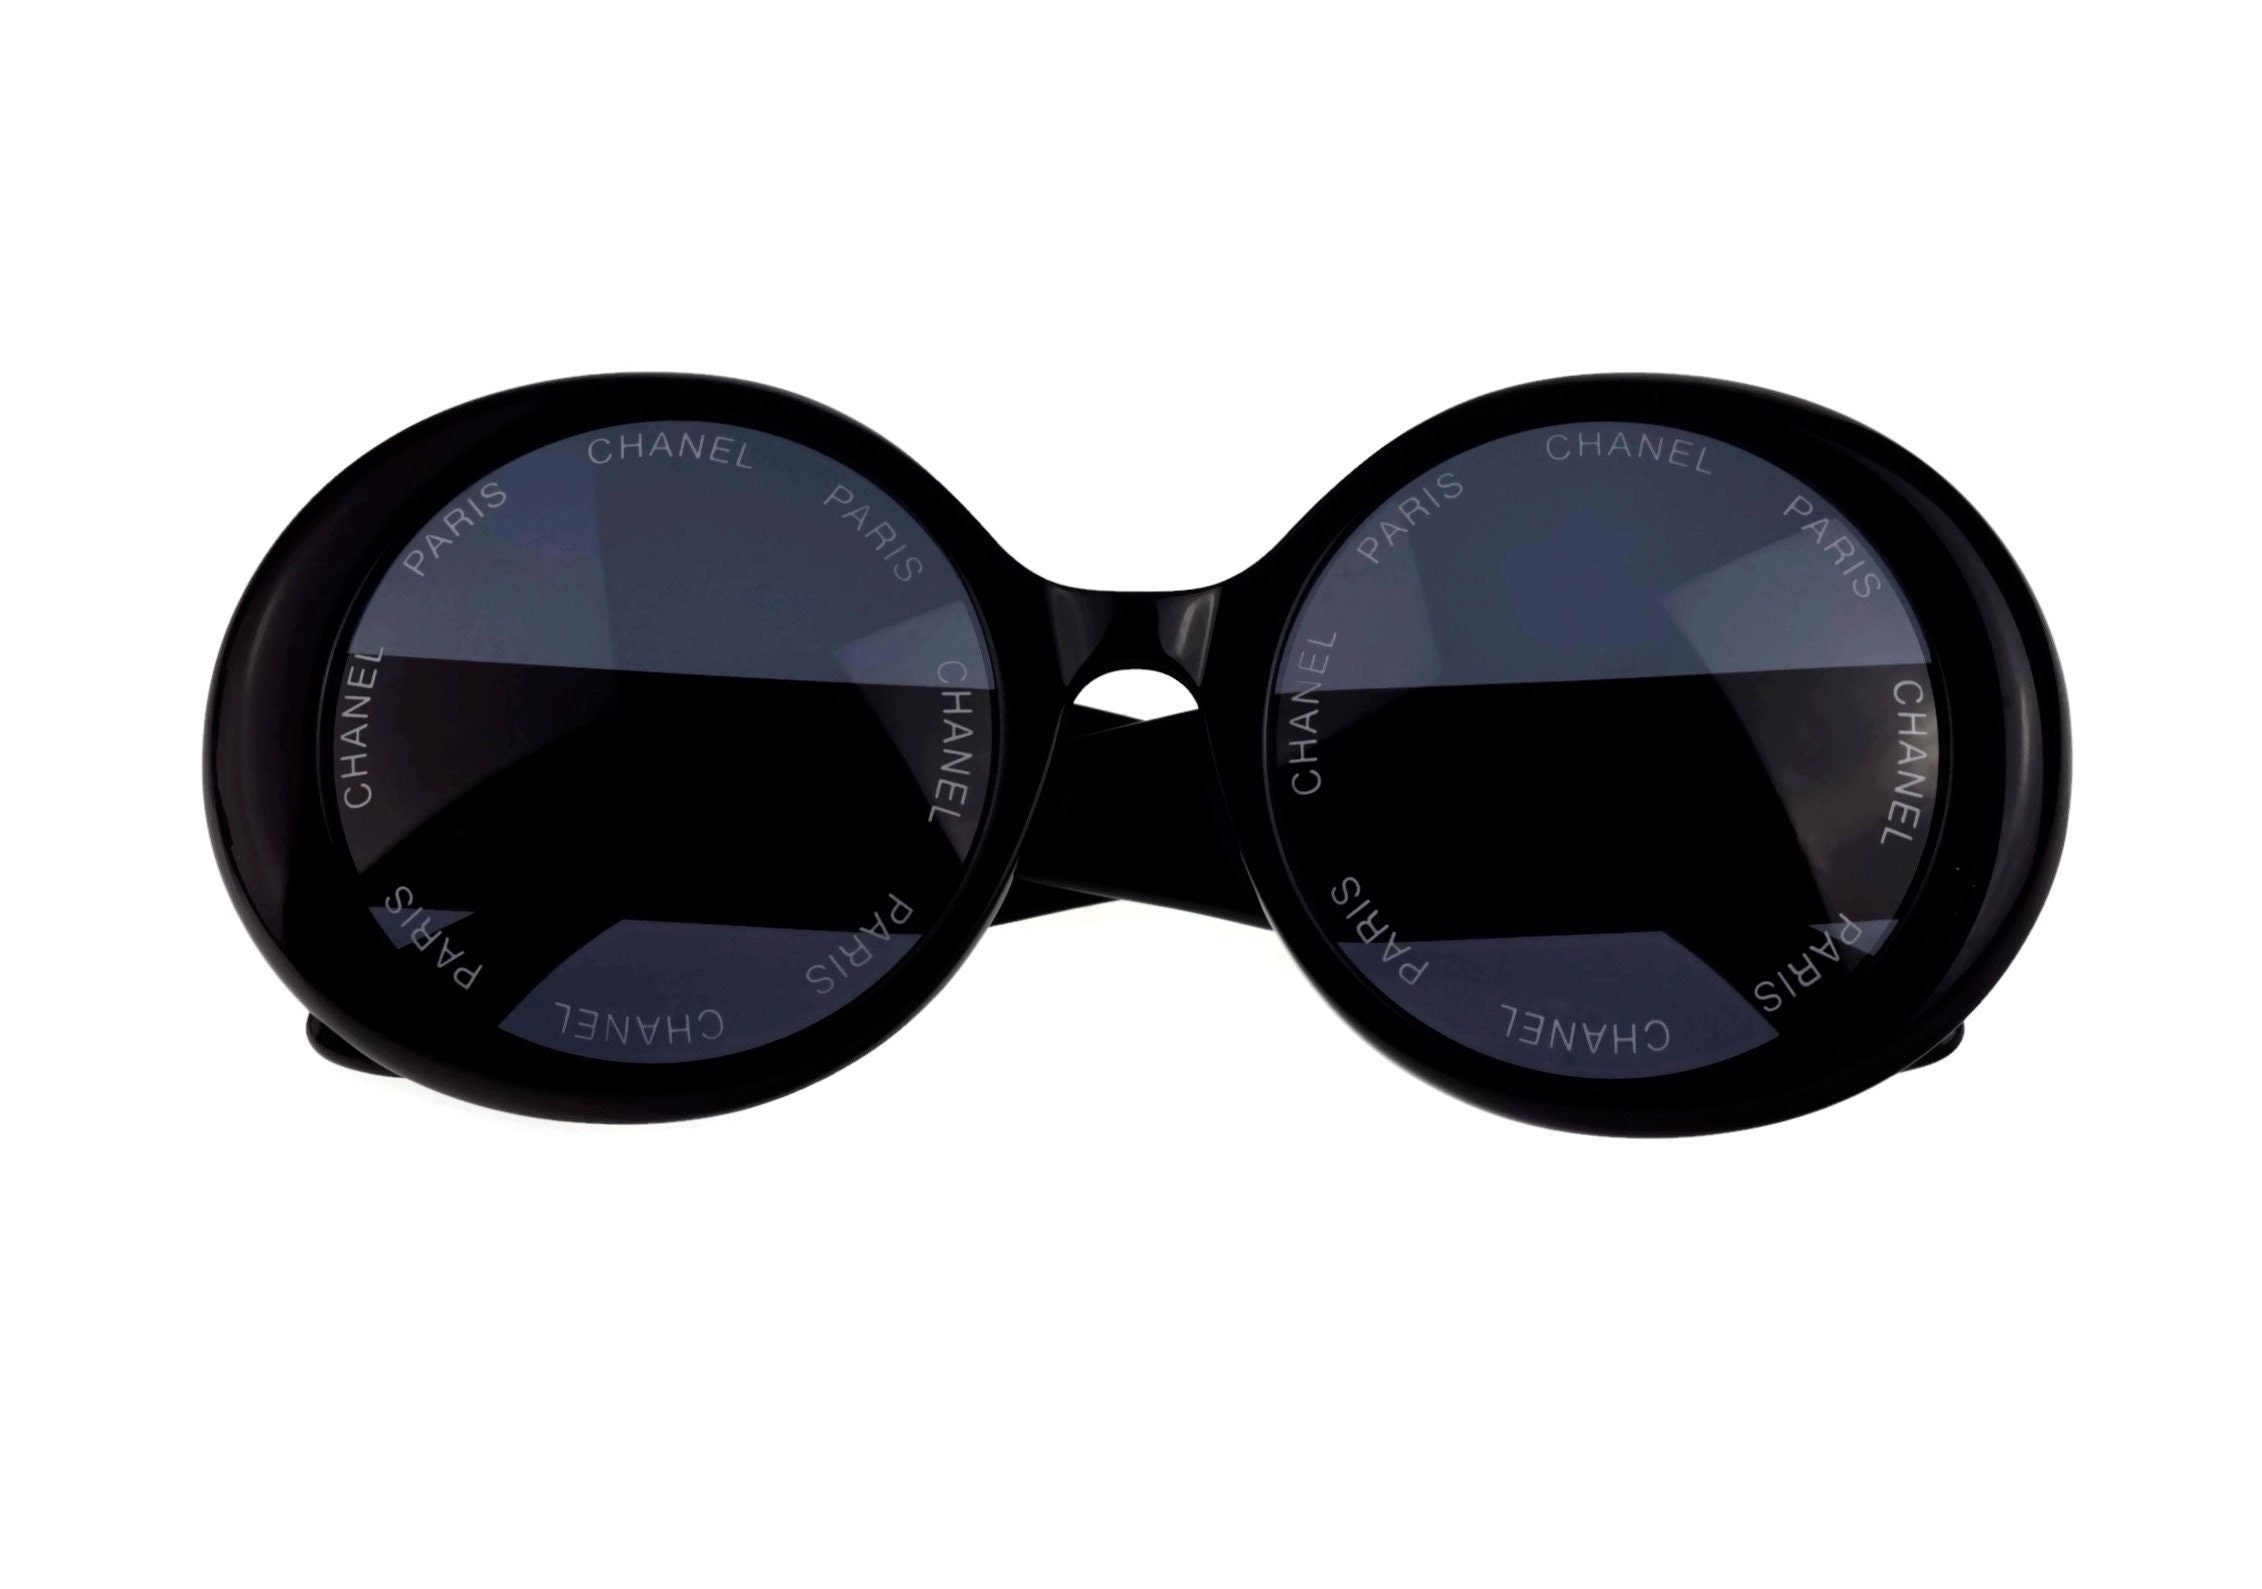 Vintage 1993 Iconic CHANEL PARIS CC Logo Round Black Sunglasses